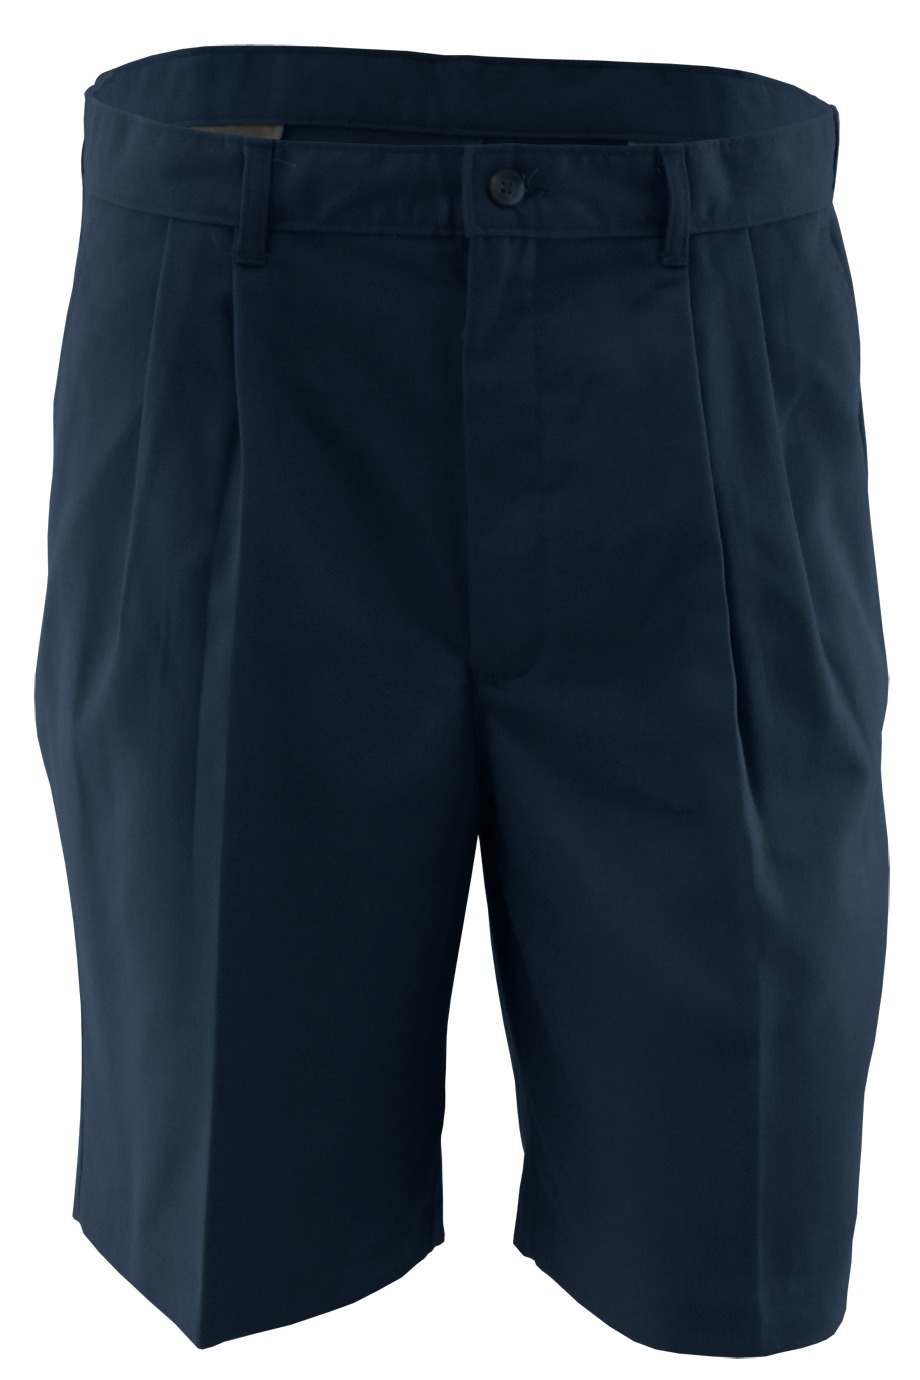 Edwards Garment 2470 - Men's Pleated Short